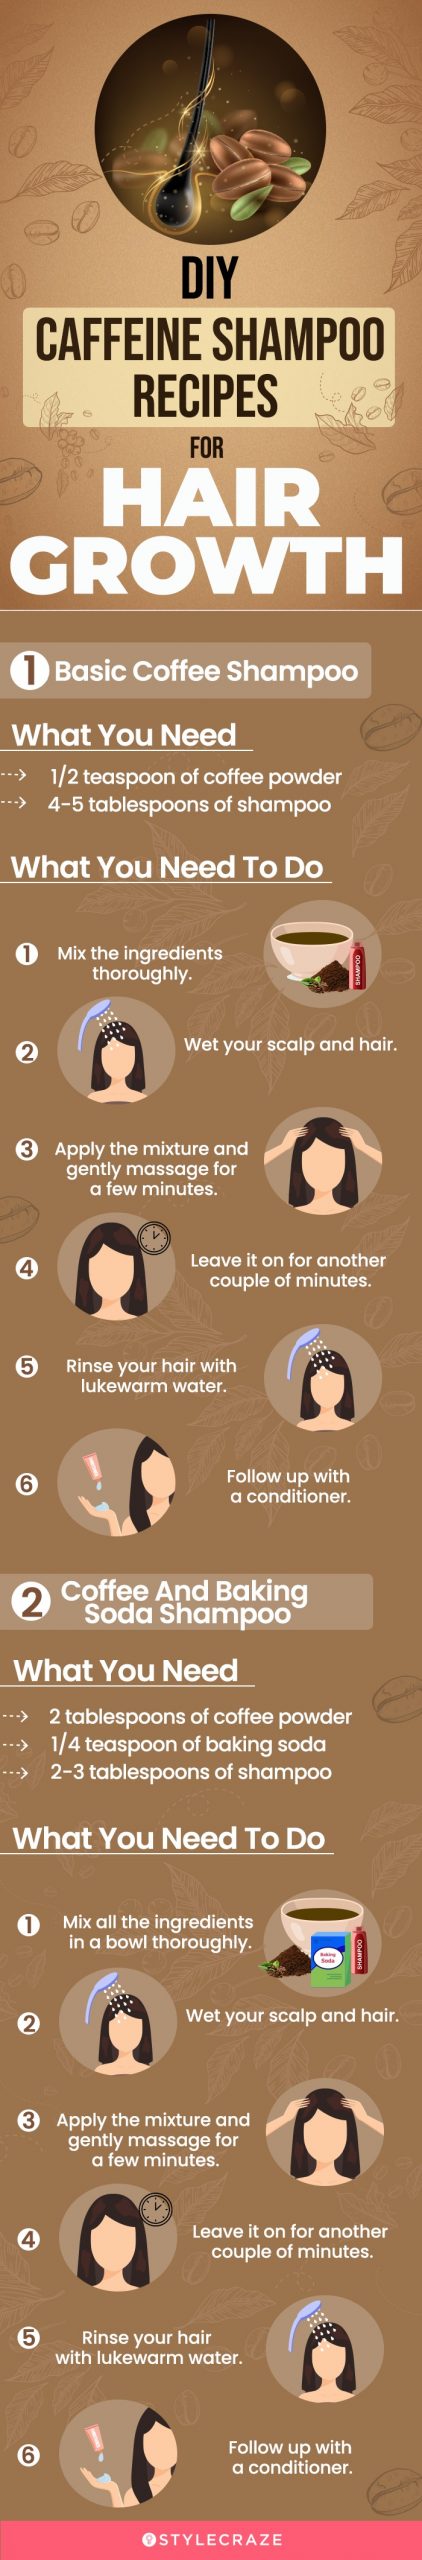 diy caffeine shampoo recipes for hair growth (infographic)